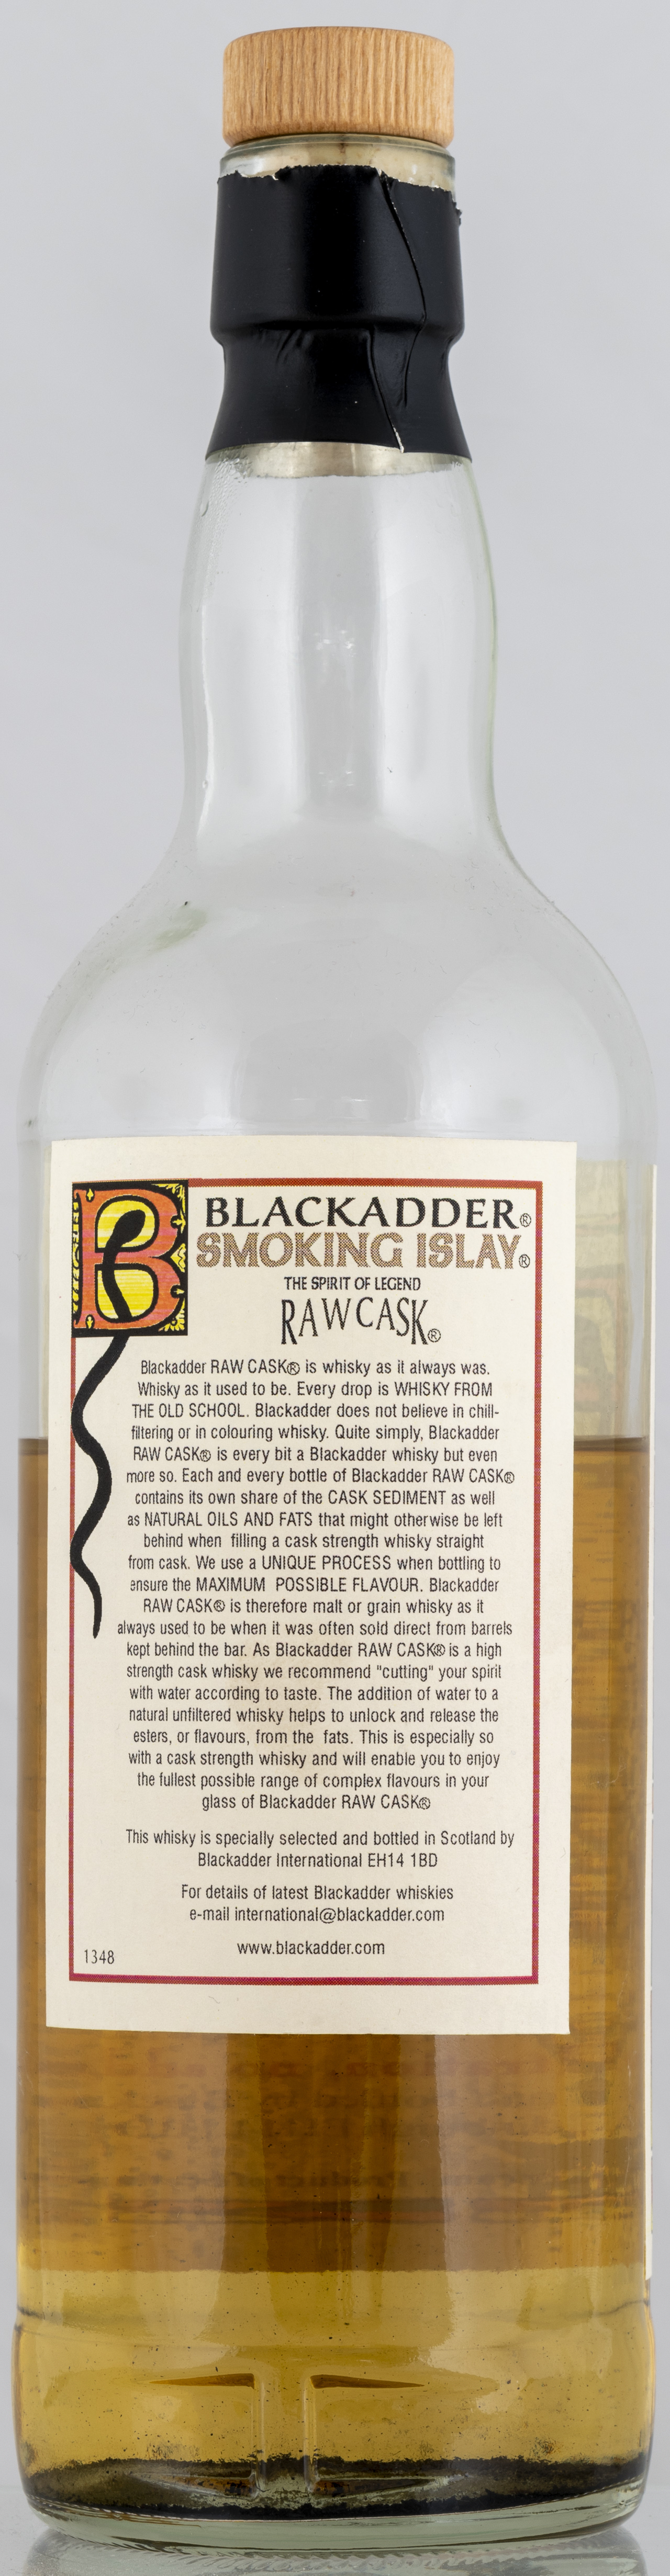 Billede: PHC_7283 - Blackadder Smoking Islay BA2013-451 - bottle back.jpg